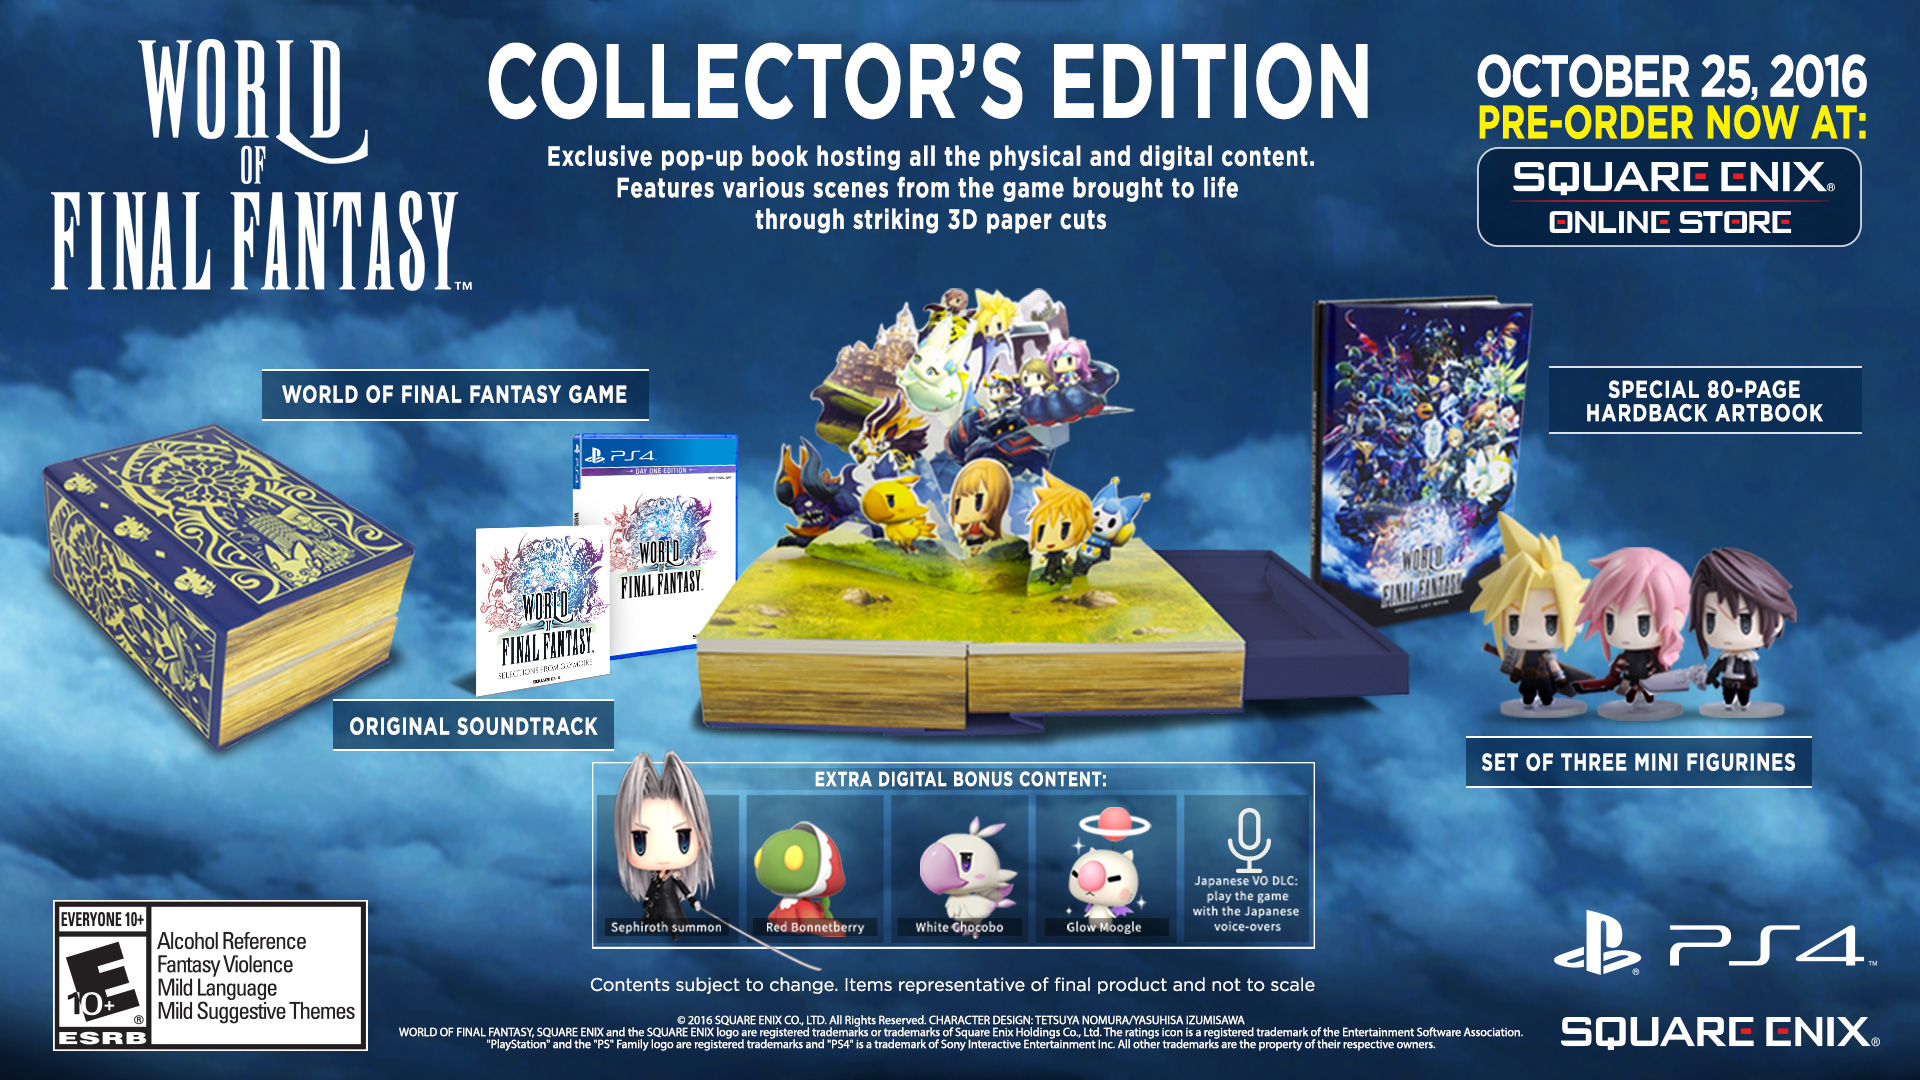 The World of Final Fantasy collector's edition massive –